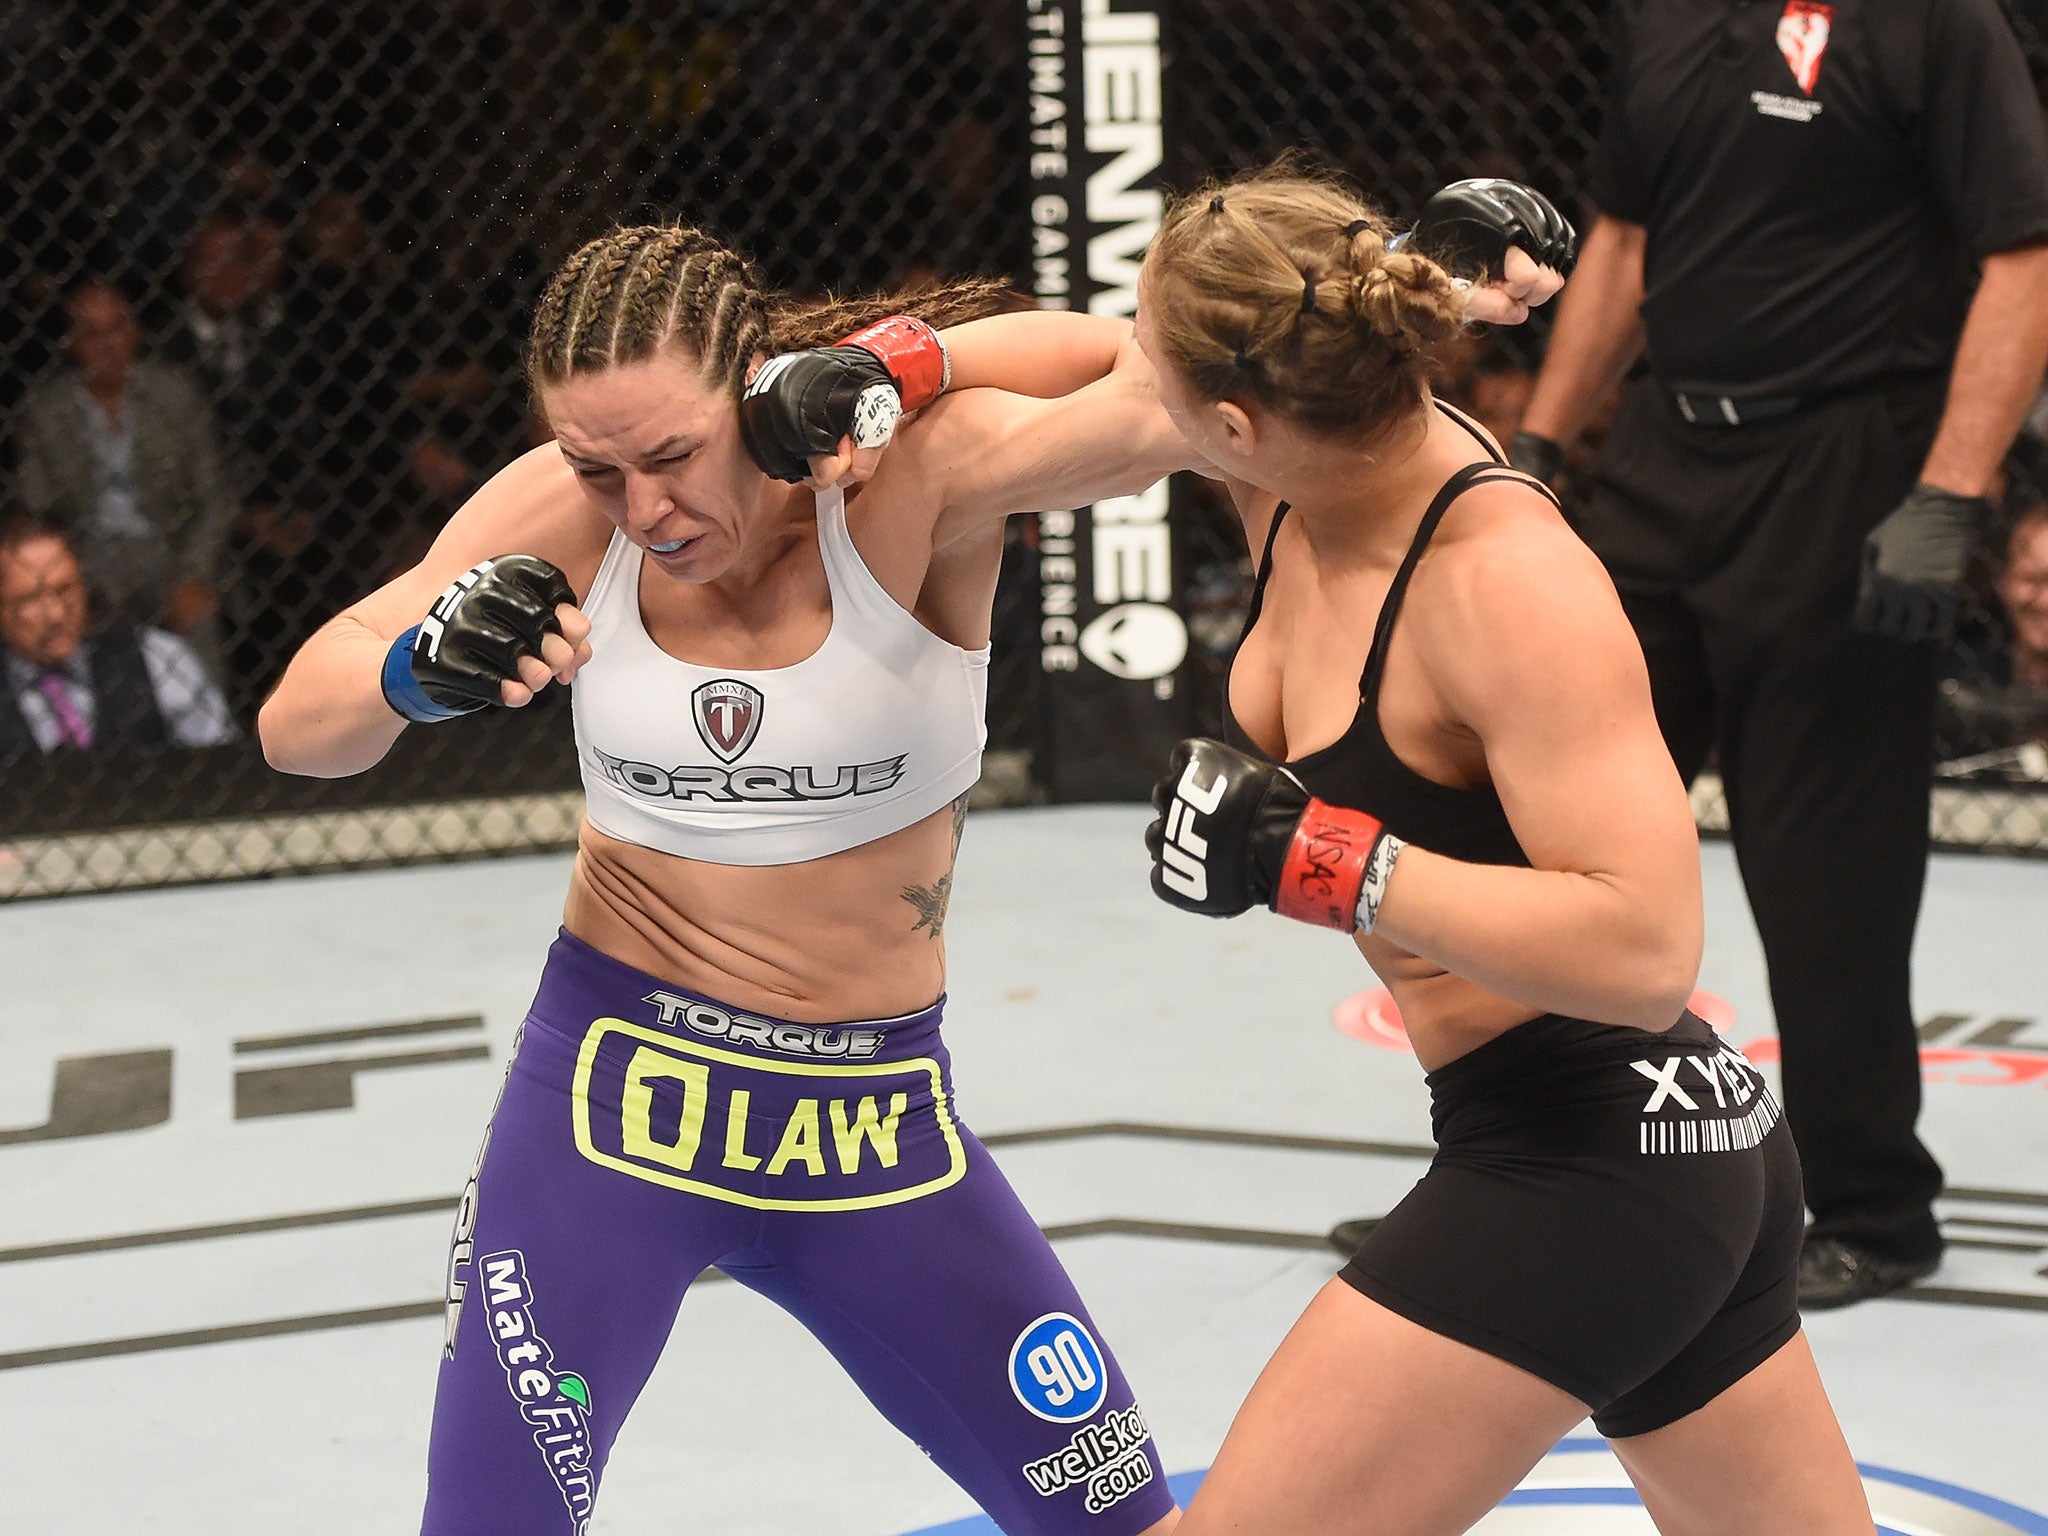 UFC bantamweight Champion Ronda Rousey punches Alexis Davis